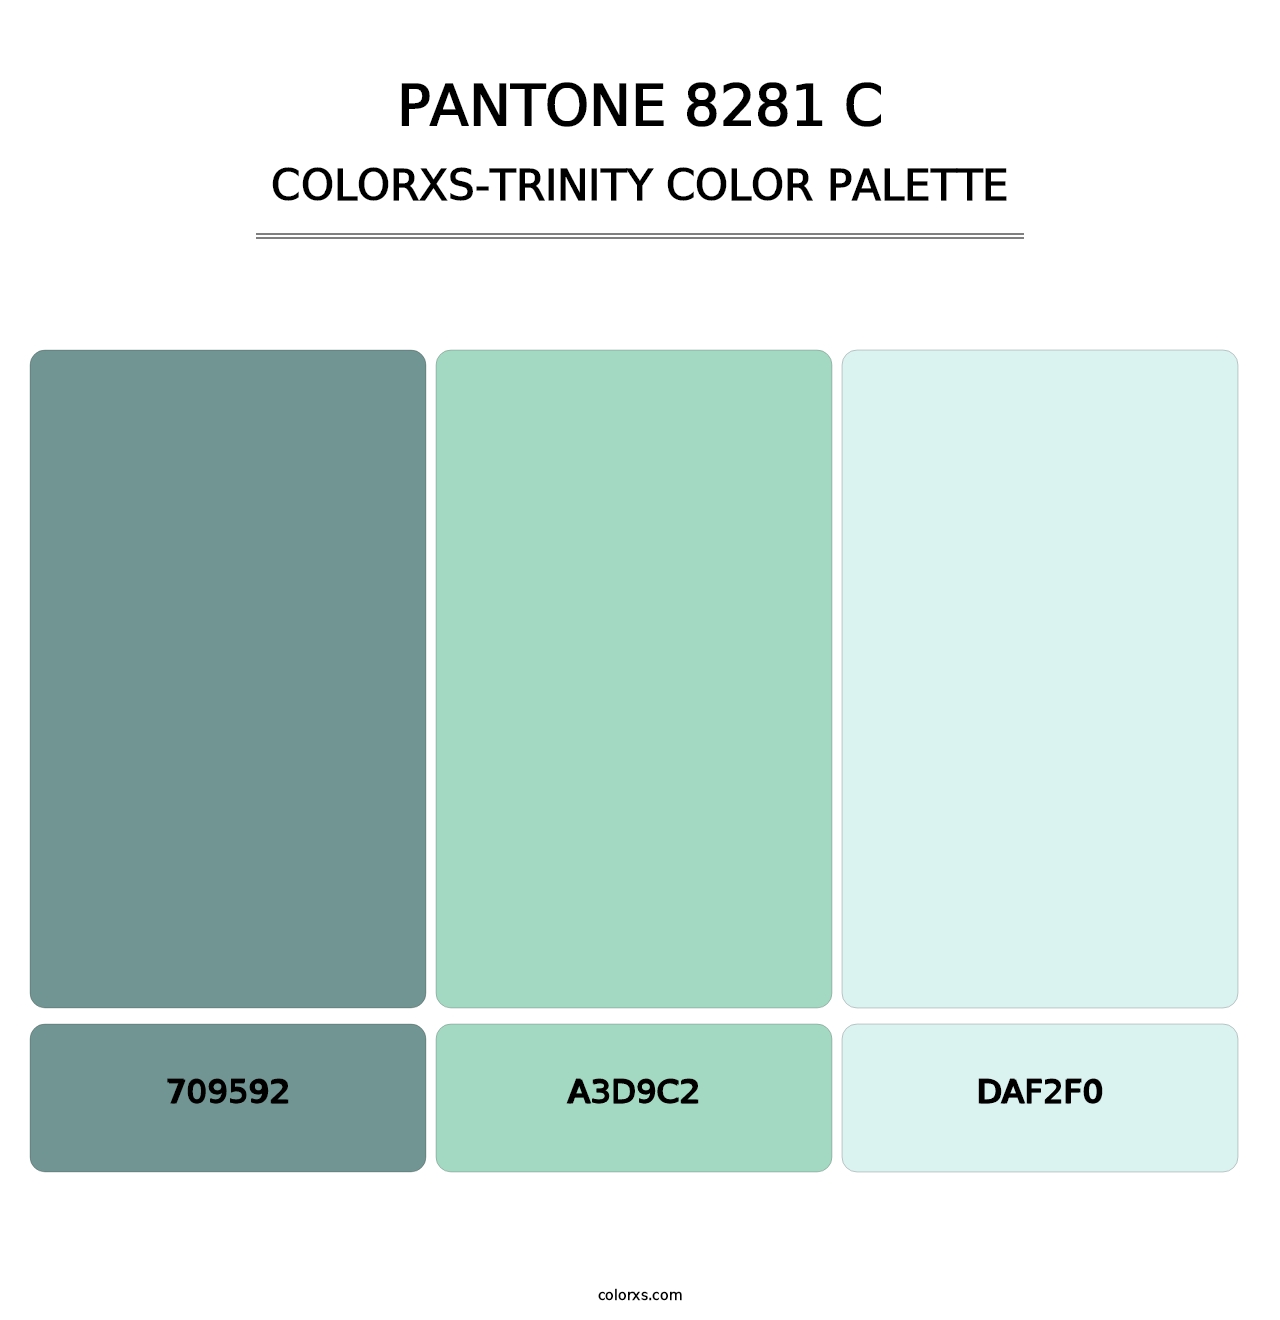 PANTONE 8281 C - Colorxs Trinity Palette